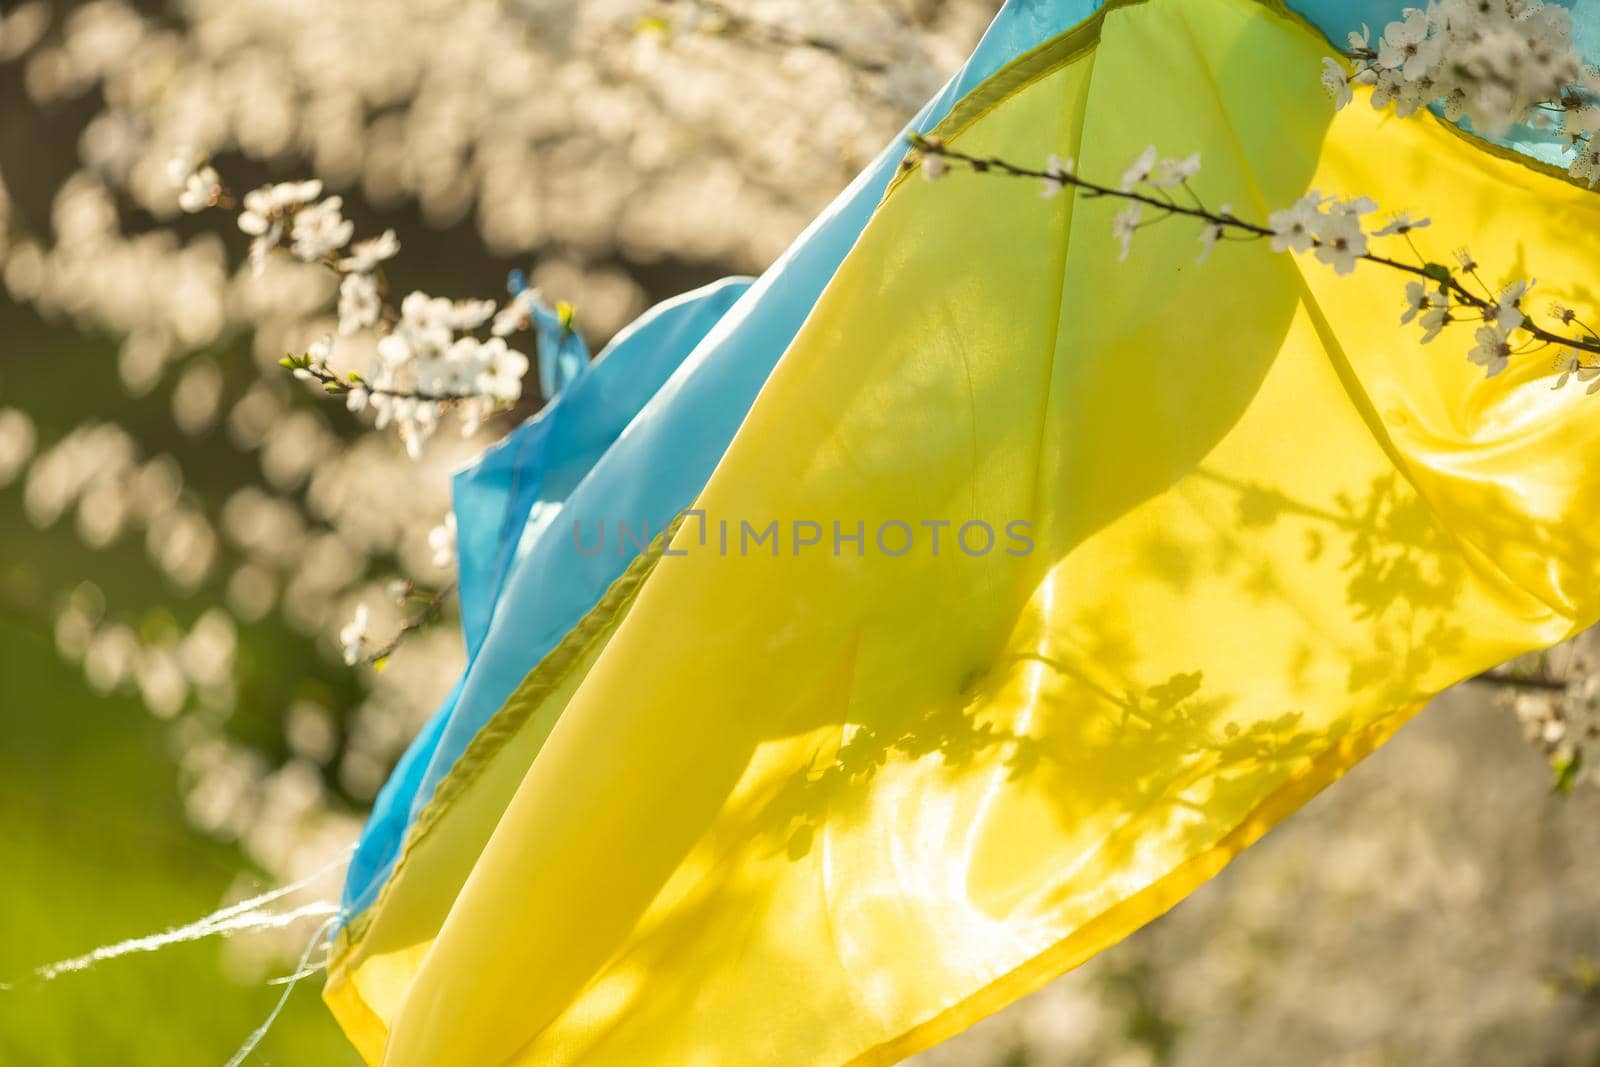 ukraine flag yellow and blue in a flower garden.